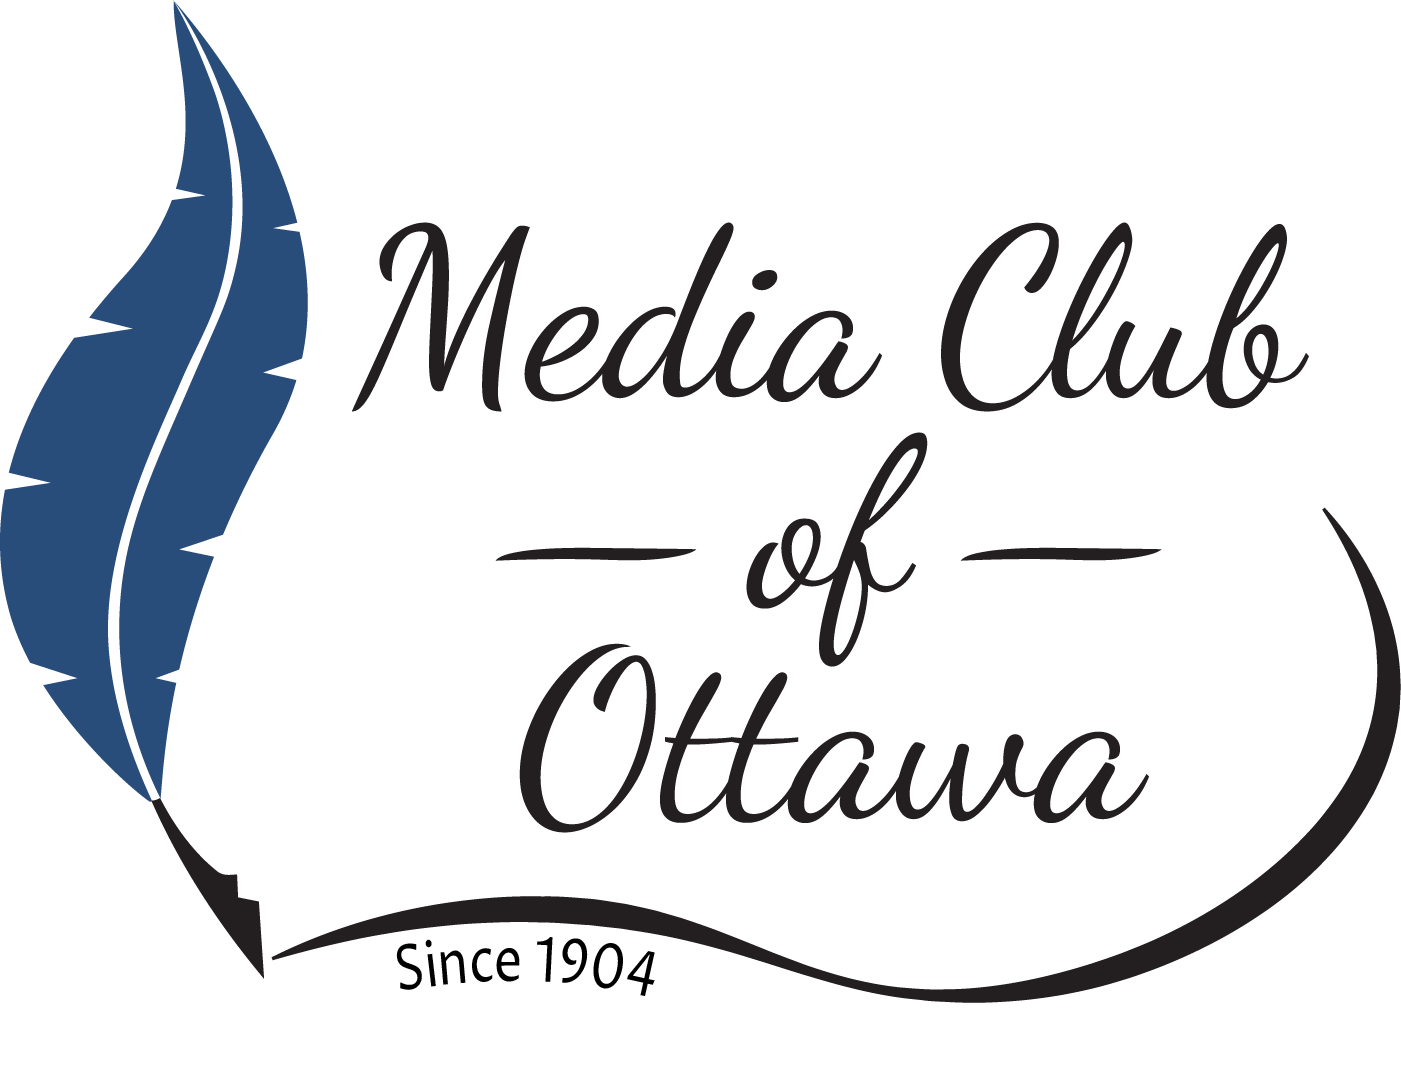 The primary logo of the media club of ottawa.